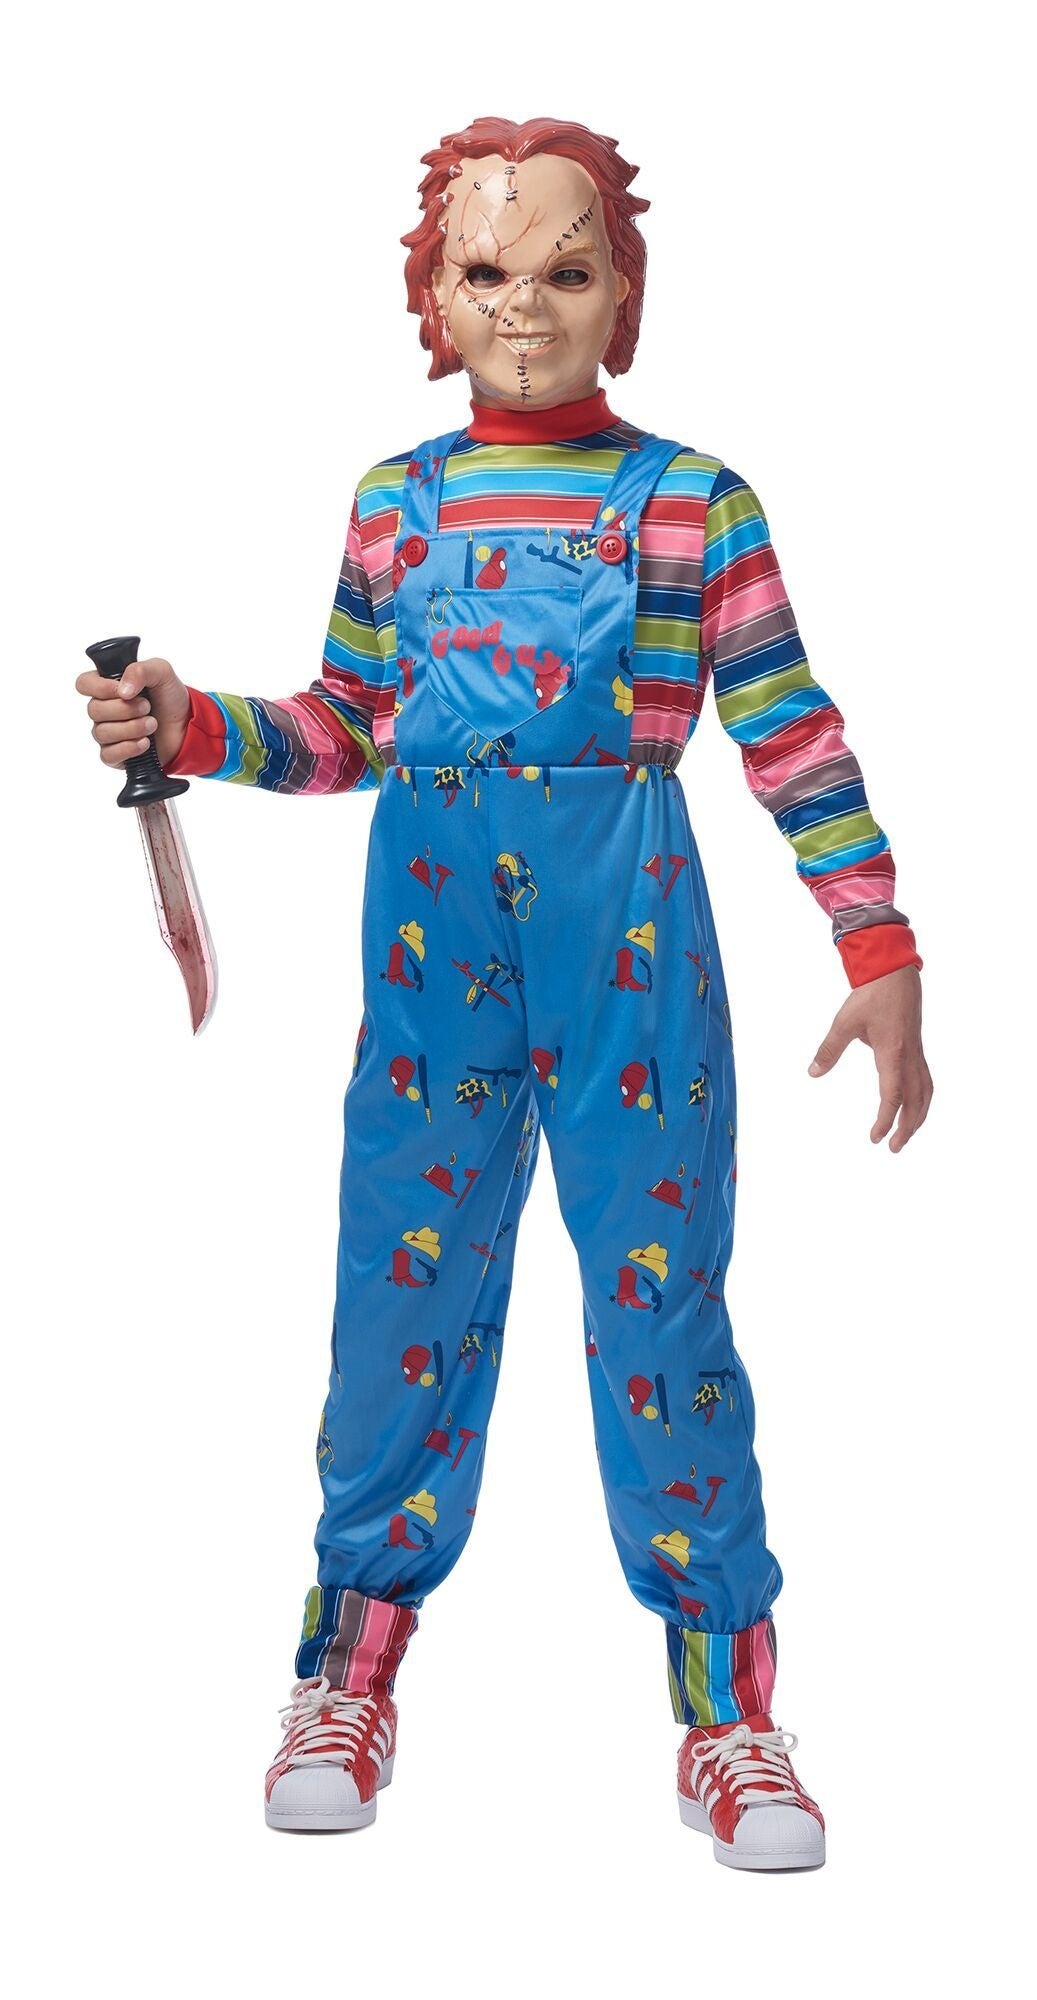 Boy's Chucky Costume (Seed of Chucky)